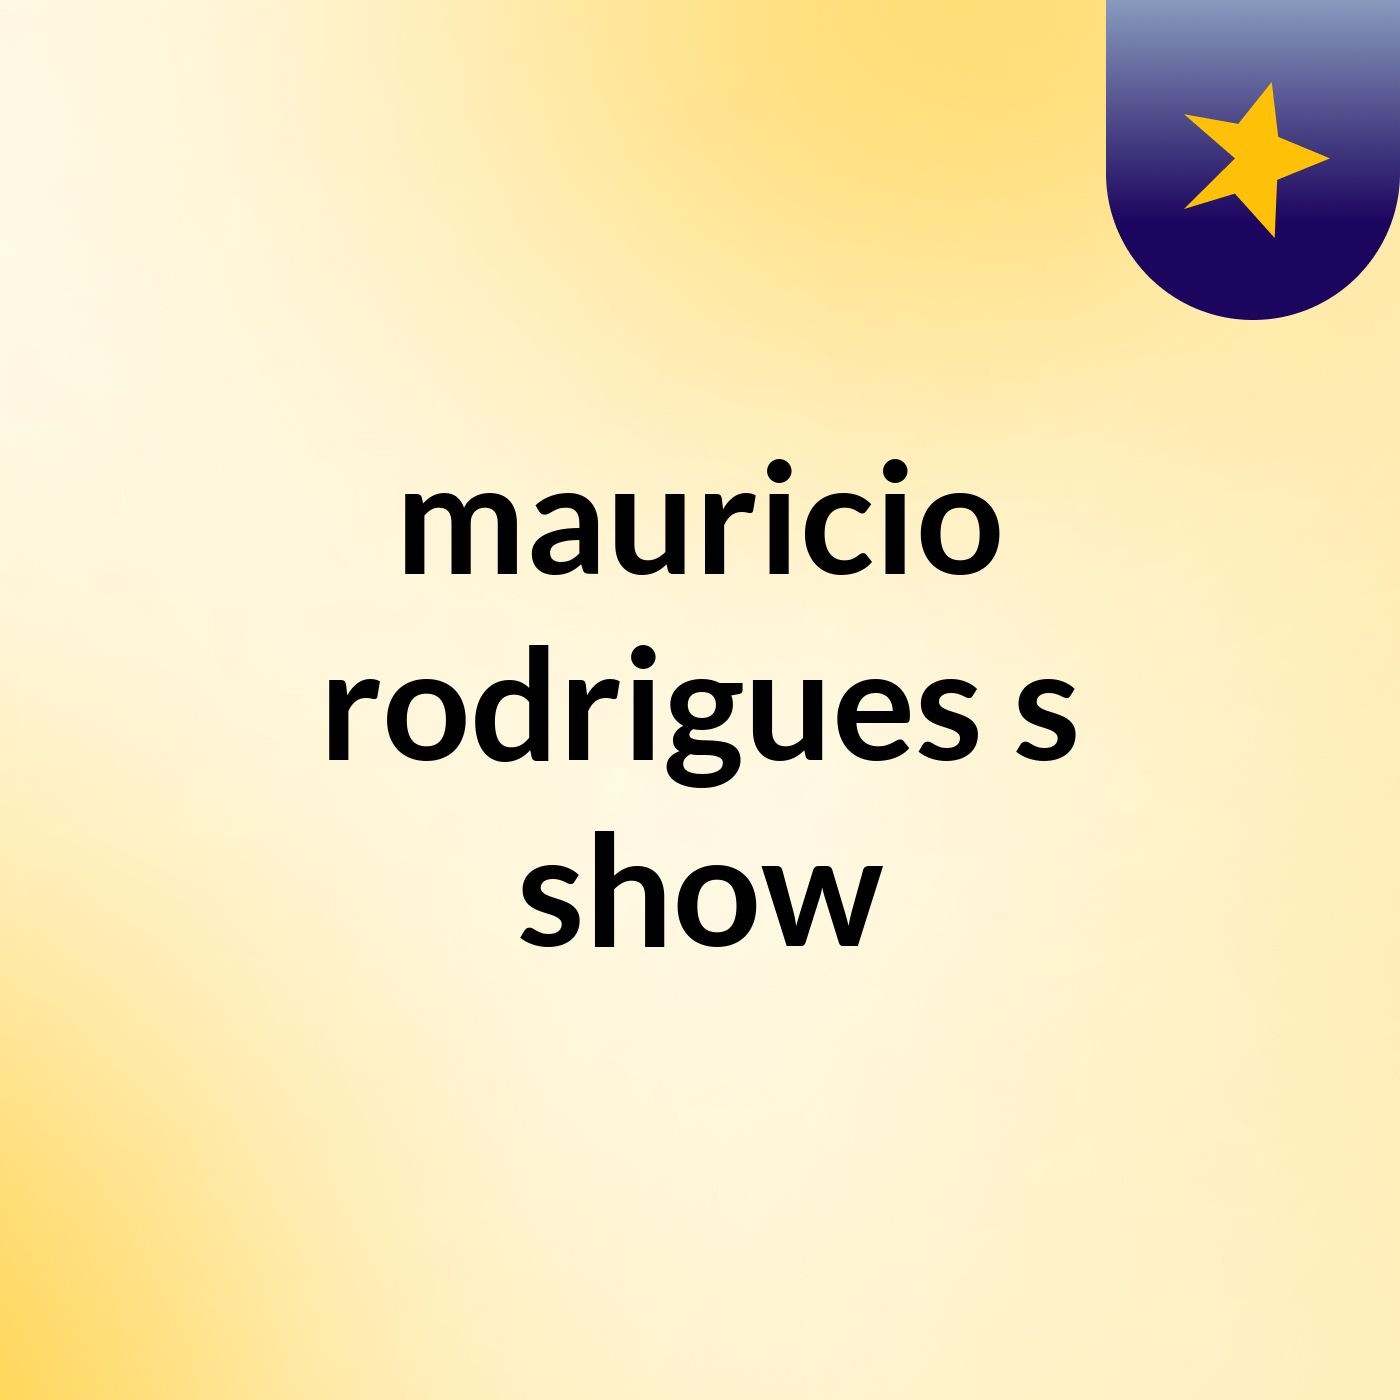 mauricio rodrigues's show